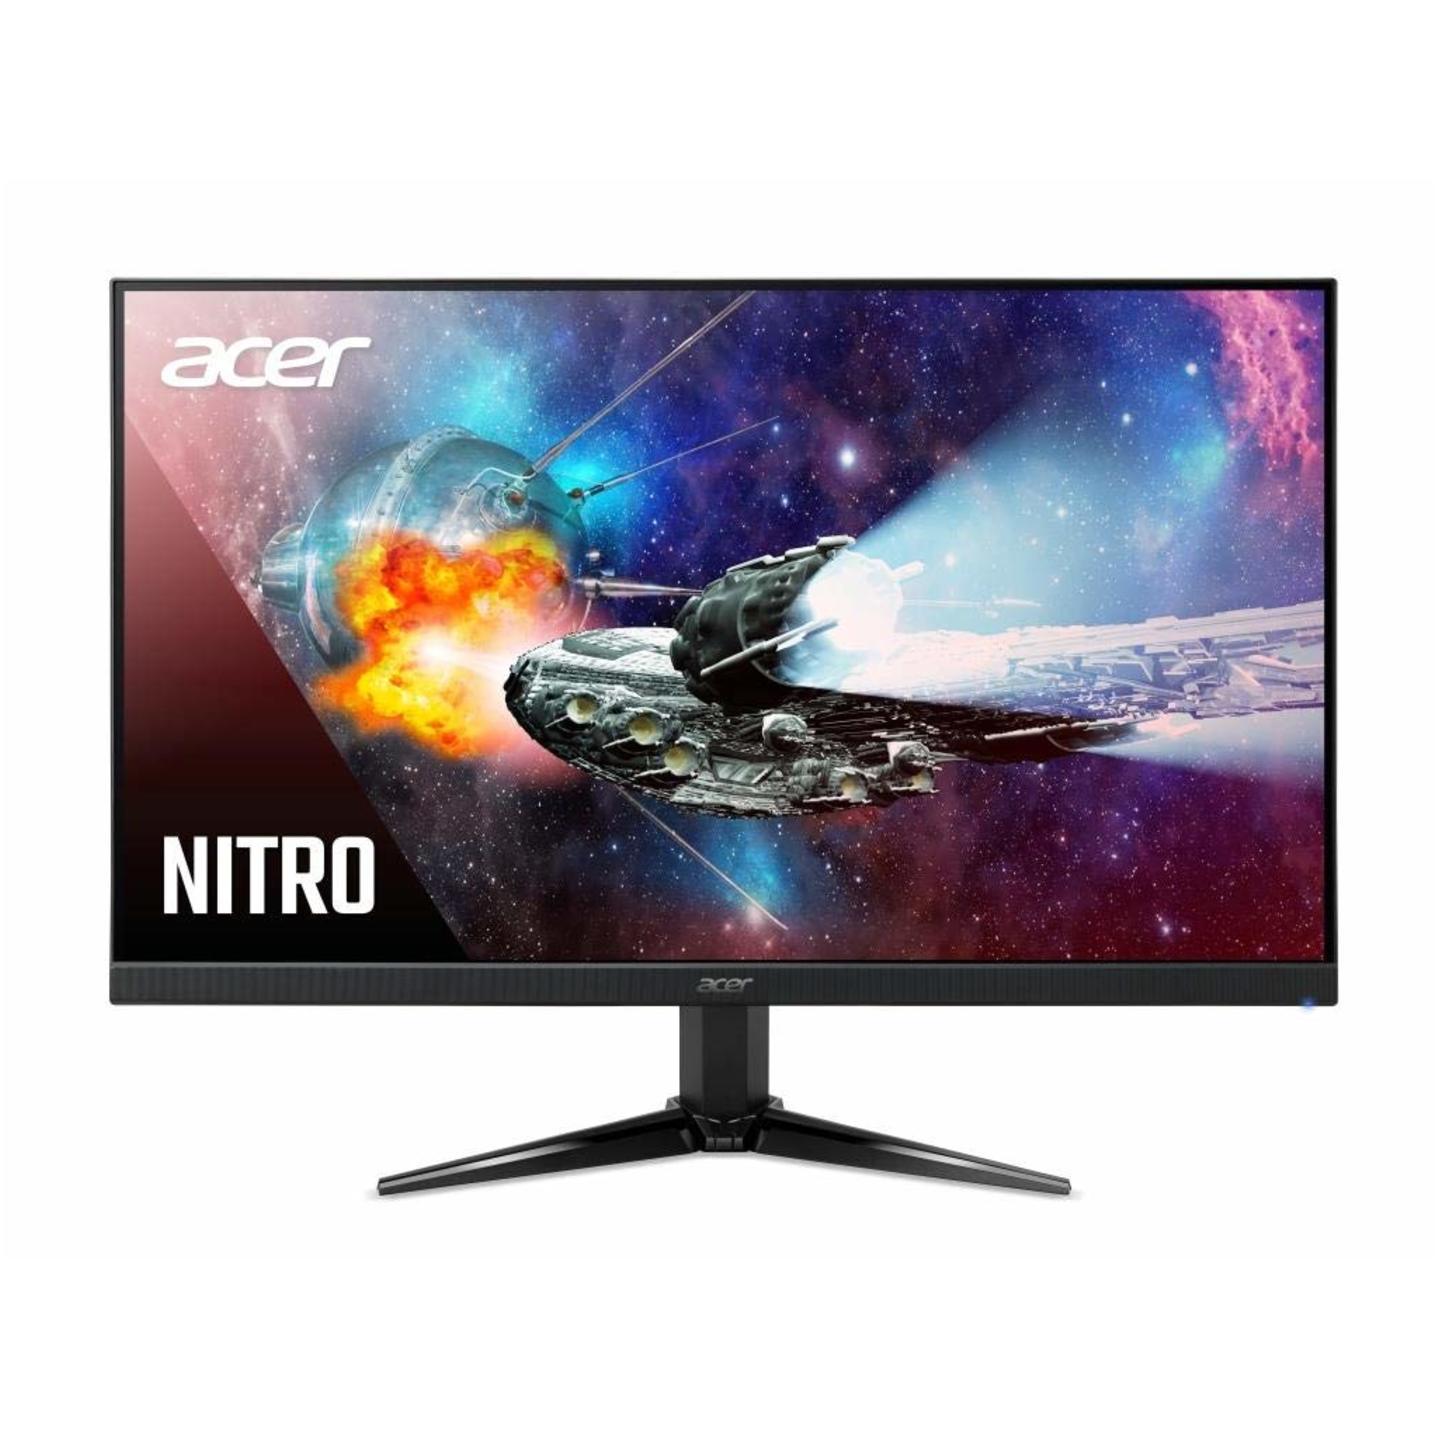 Acer Nitro QG221Q 21.5 Inch (54.61 cm) Full HD Gaming Monitor I VA Panel I 1 MS Response, 75 Hz Refresh Rate I 250 Nits Brightness I AMD Free Sync I Eye Care Features (Black)